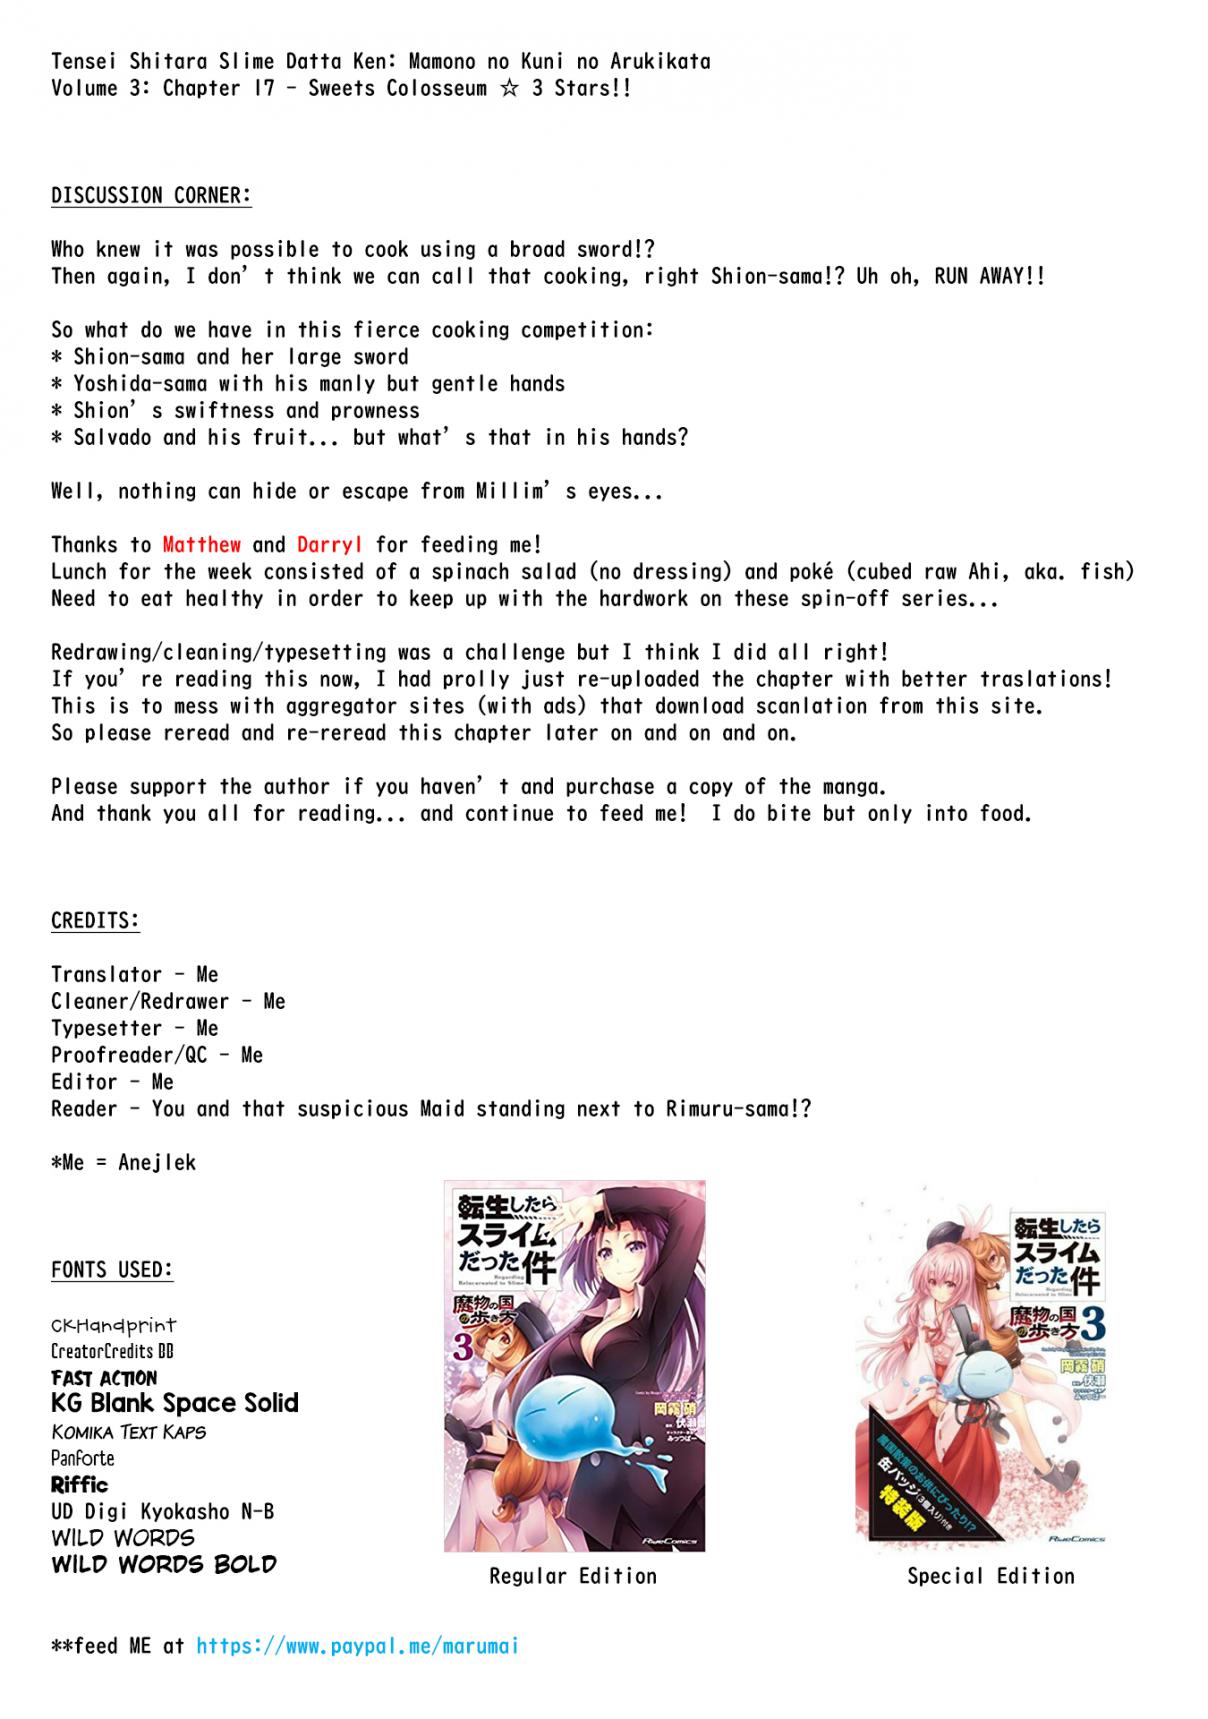 Tensei Shitara Slime Datta Ken: Mamono no Kuni no Arukikata Vol. 3 Ch. 17 Sweets Colosseum ☆ 3 Stars!!